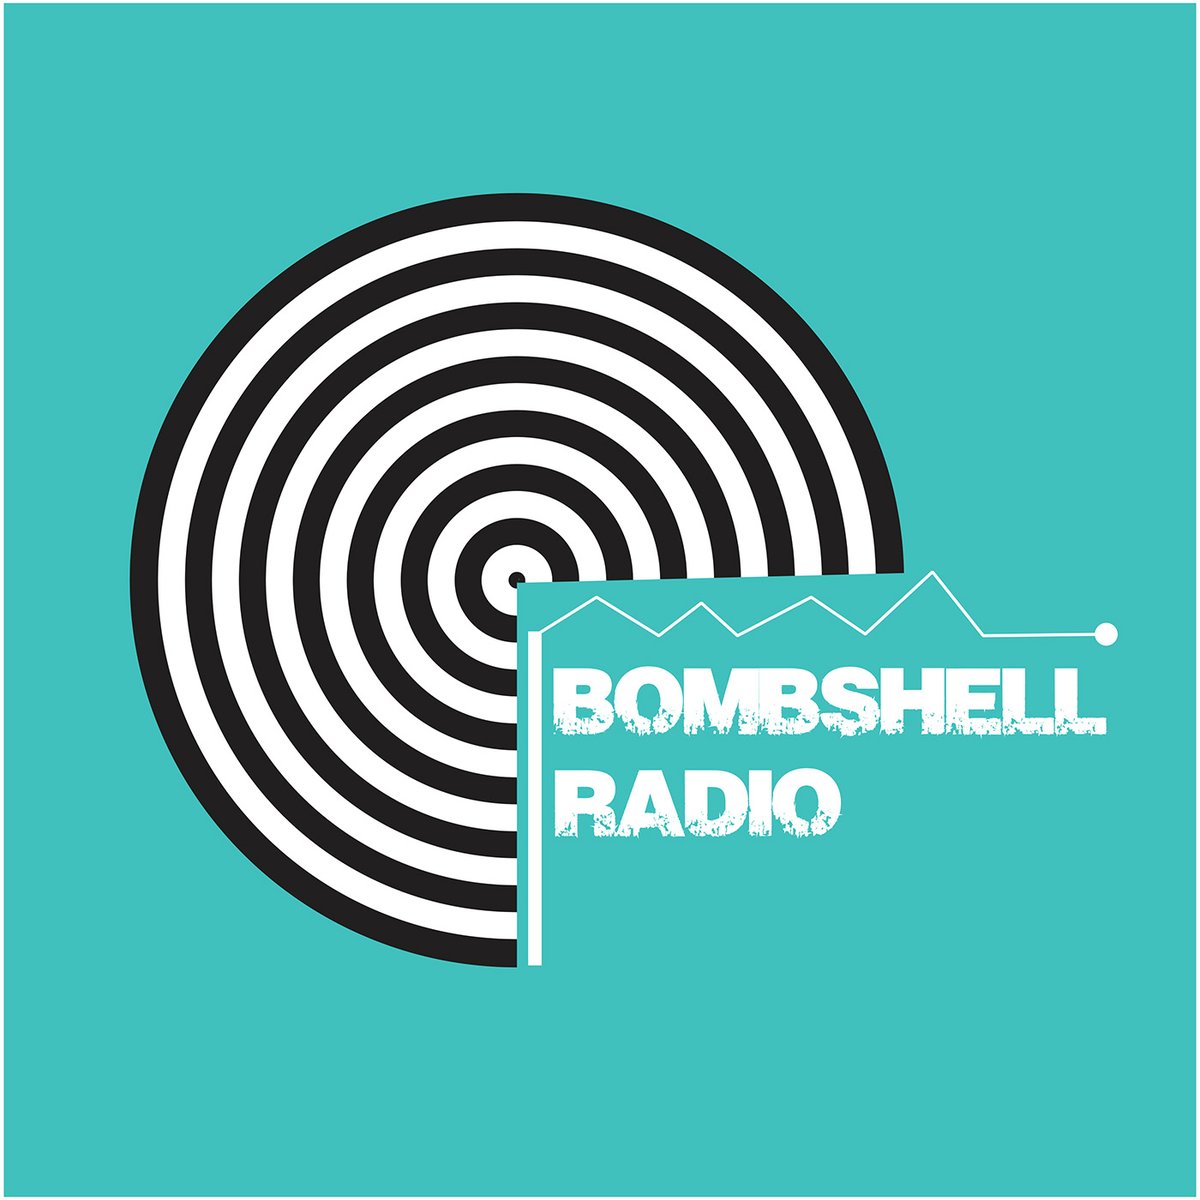 24-7 Radio! bombshellradio.com Glimmer - shn shn Join Us!